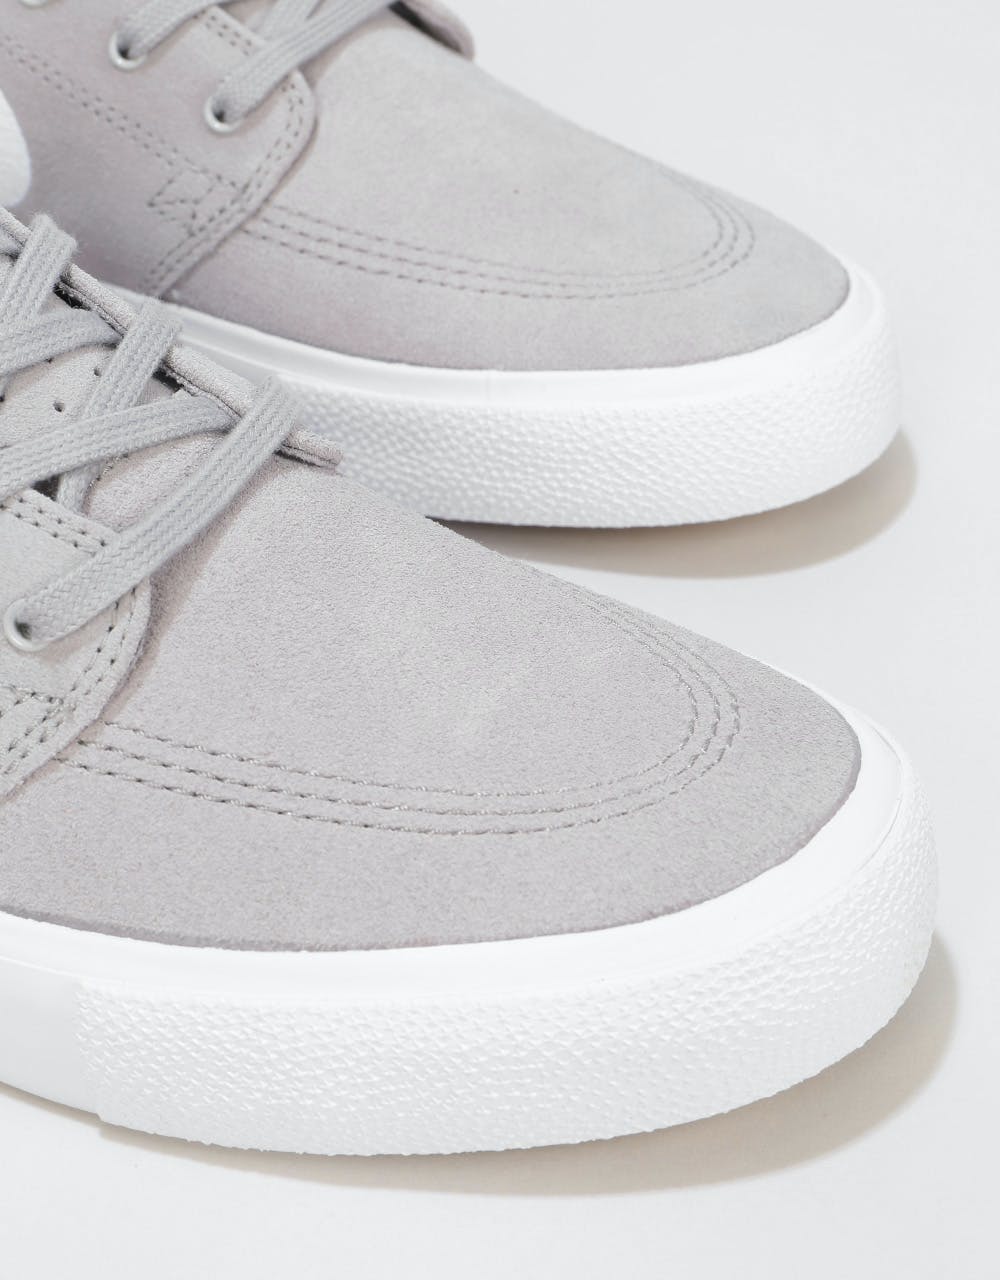 Nike SB Zoom Janoski RM Skate Shoes - Atmosphere Grey/White-Dark Grey